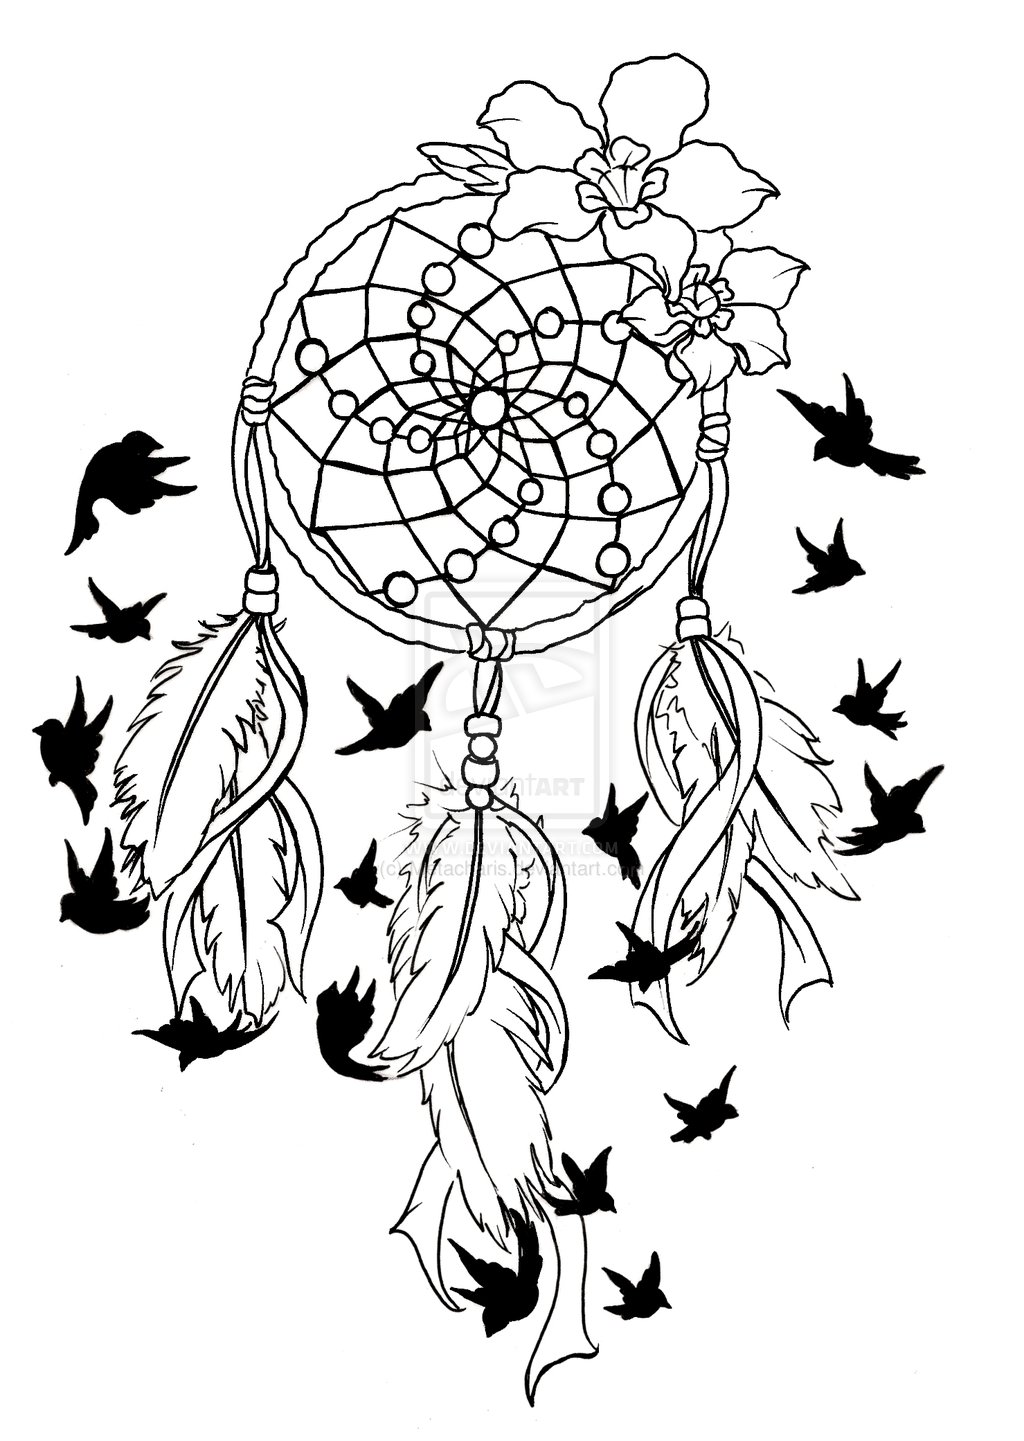 Black Birds And Dreamcatcher Tattoo Design Sample